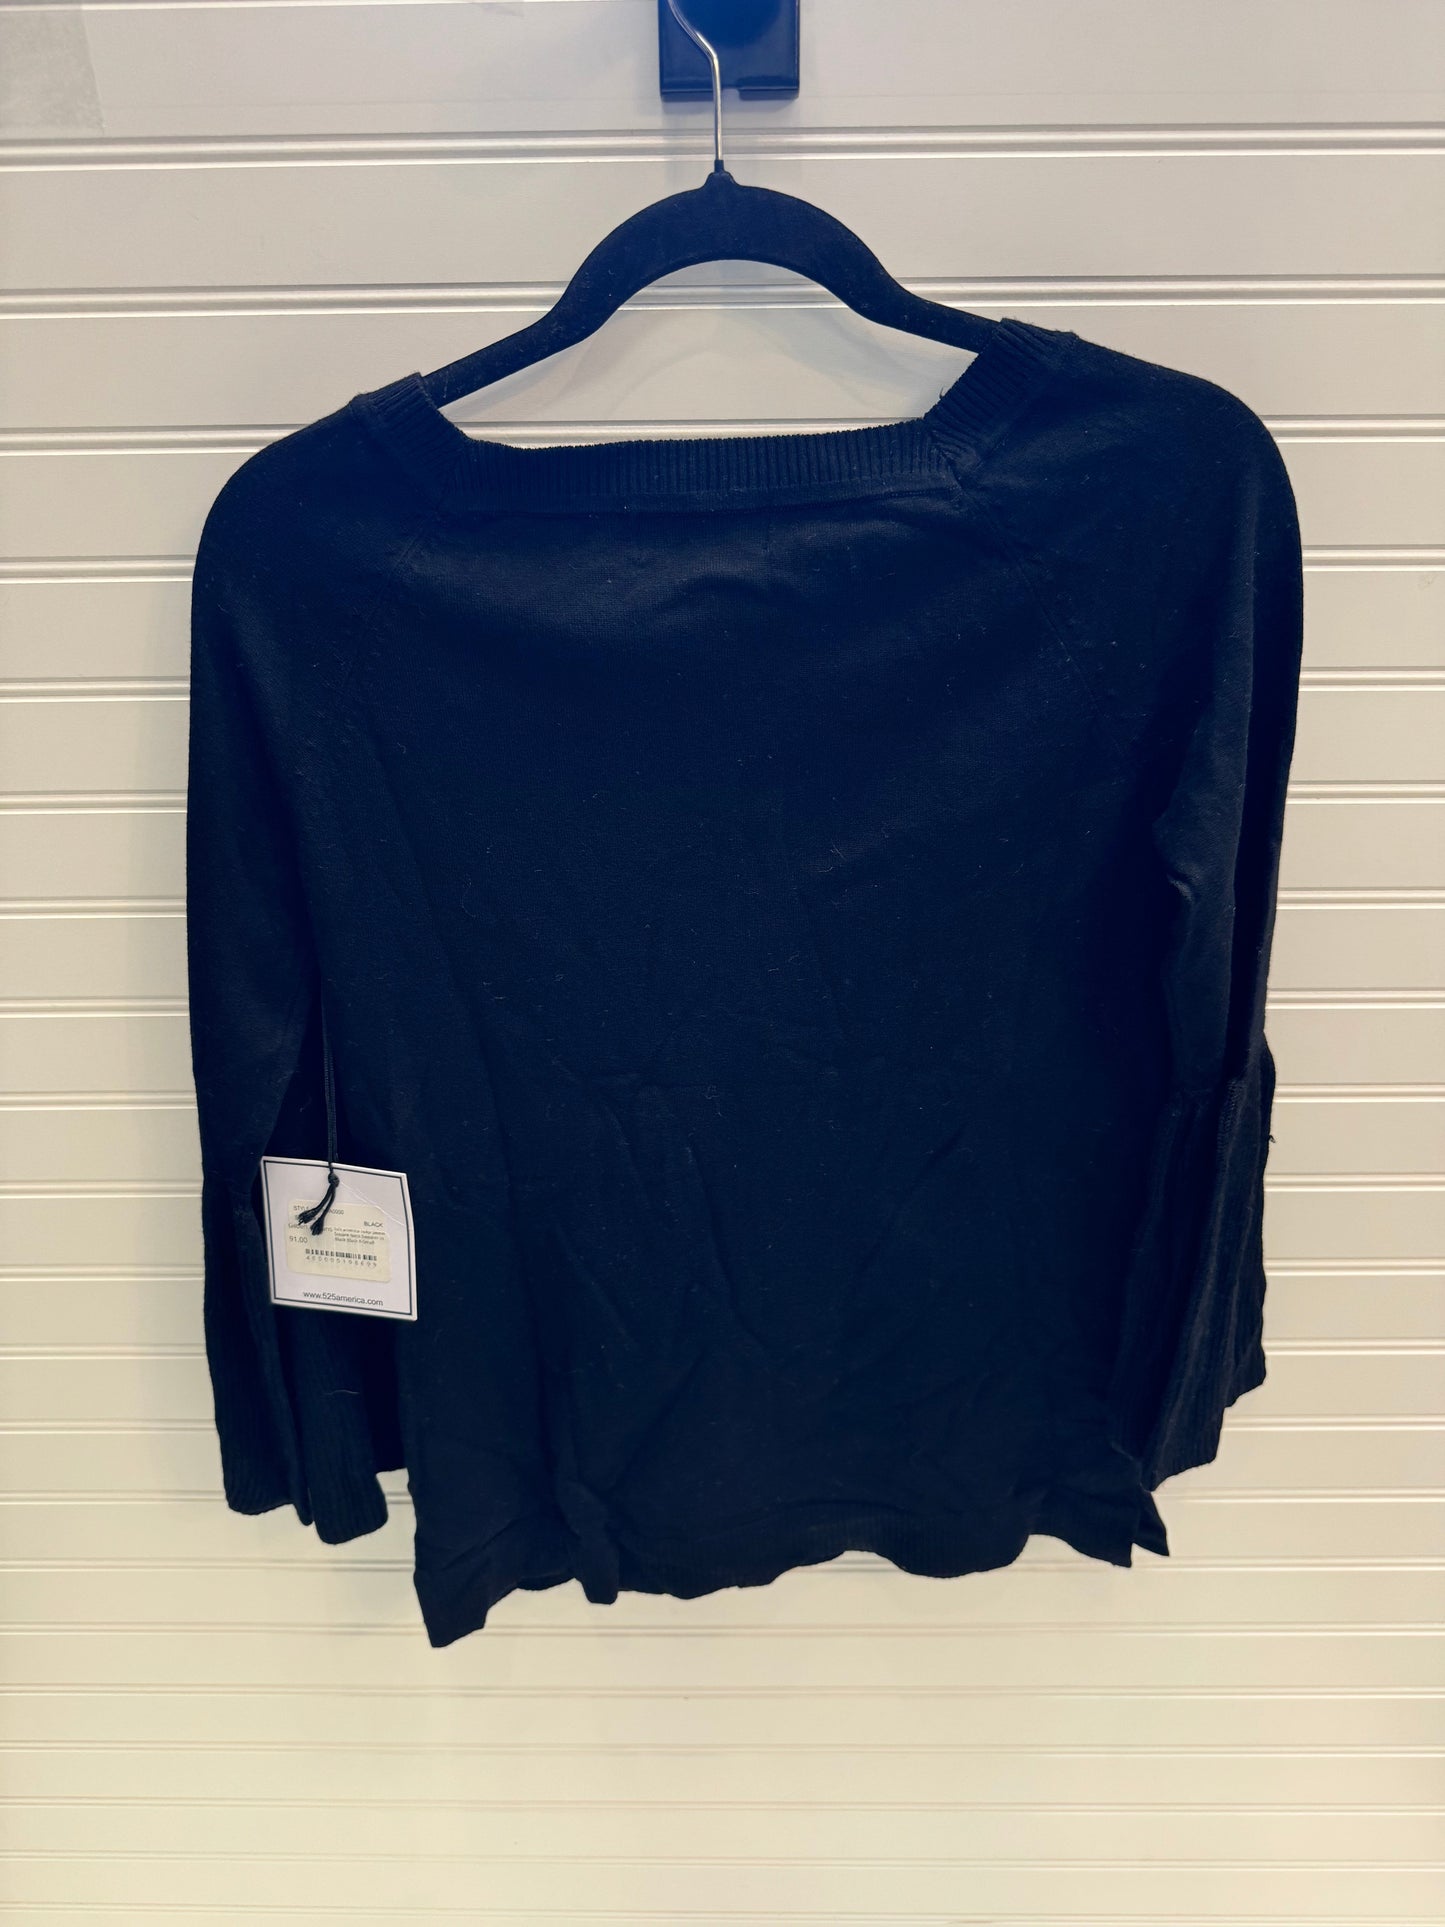 Black Sweater 525 America, Size Xs